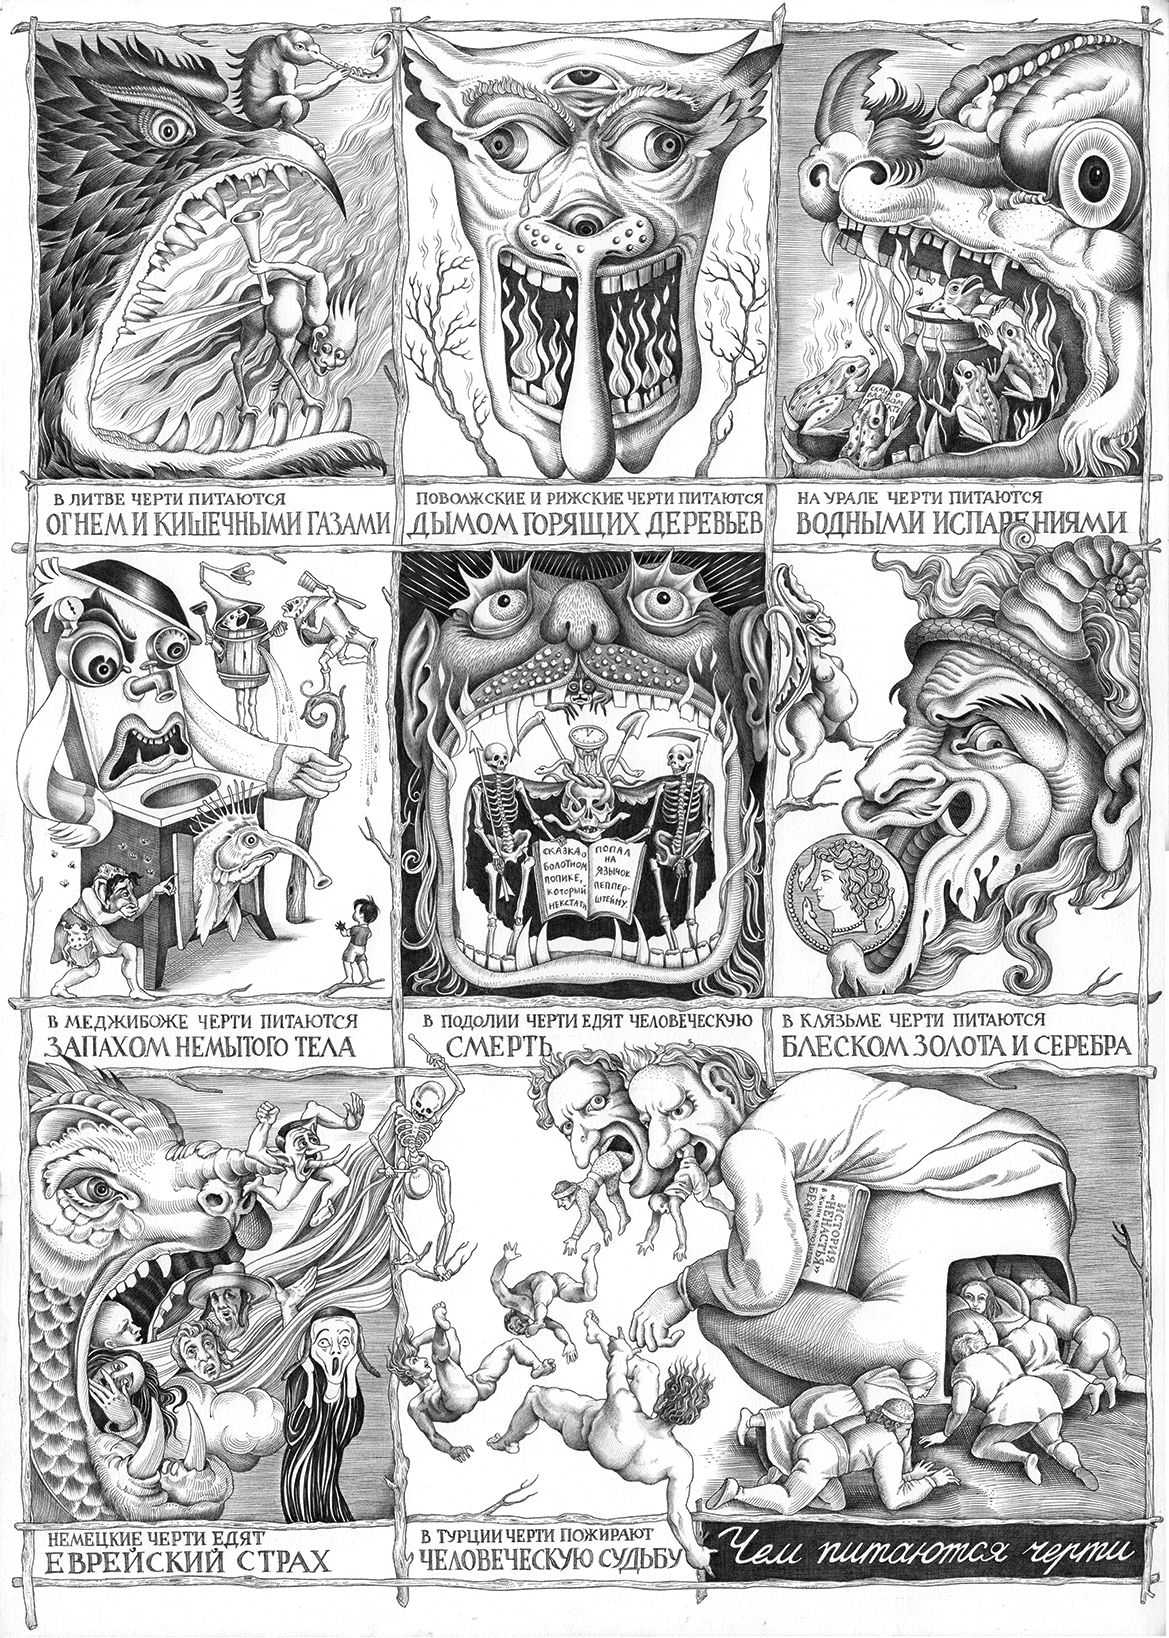 book illustration black and white judaica Cabbala emblemata symbolism fantasy narrative illustration Demons angels weird medicine dreams illumination hand drawn